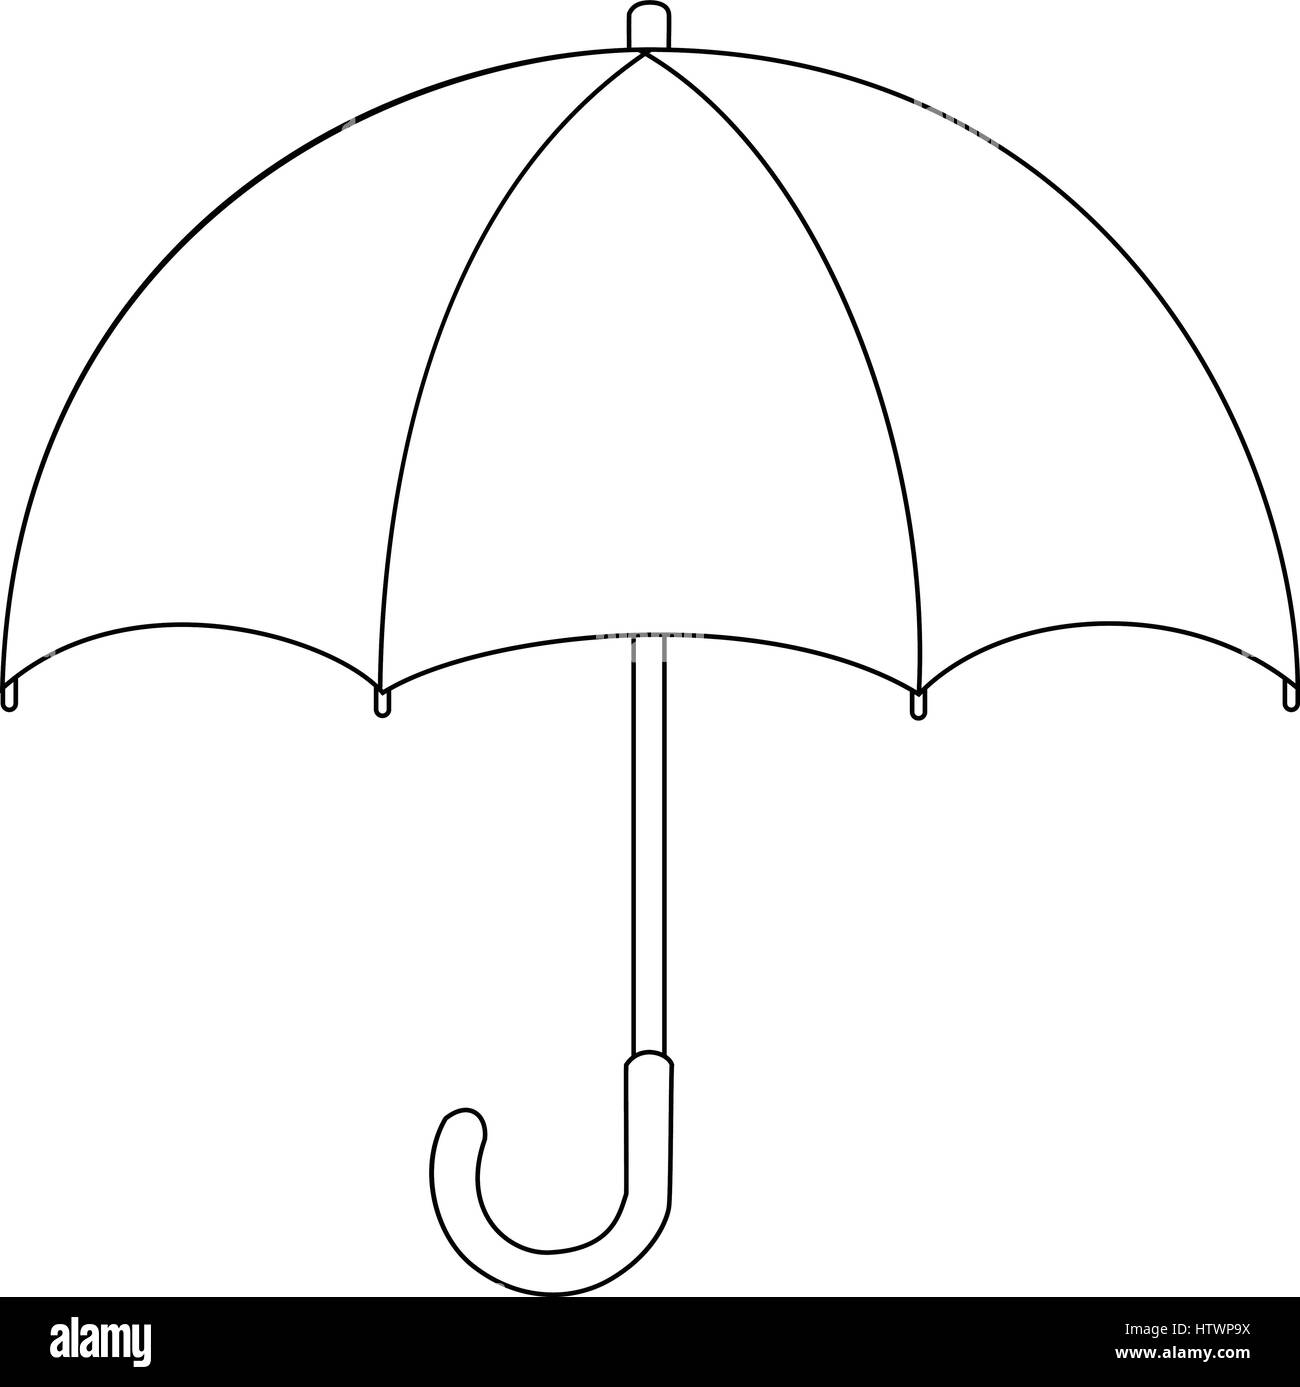 how to draw an umbrella 😳😳 #josuaas24 #art #draw #drawing | TikTok